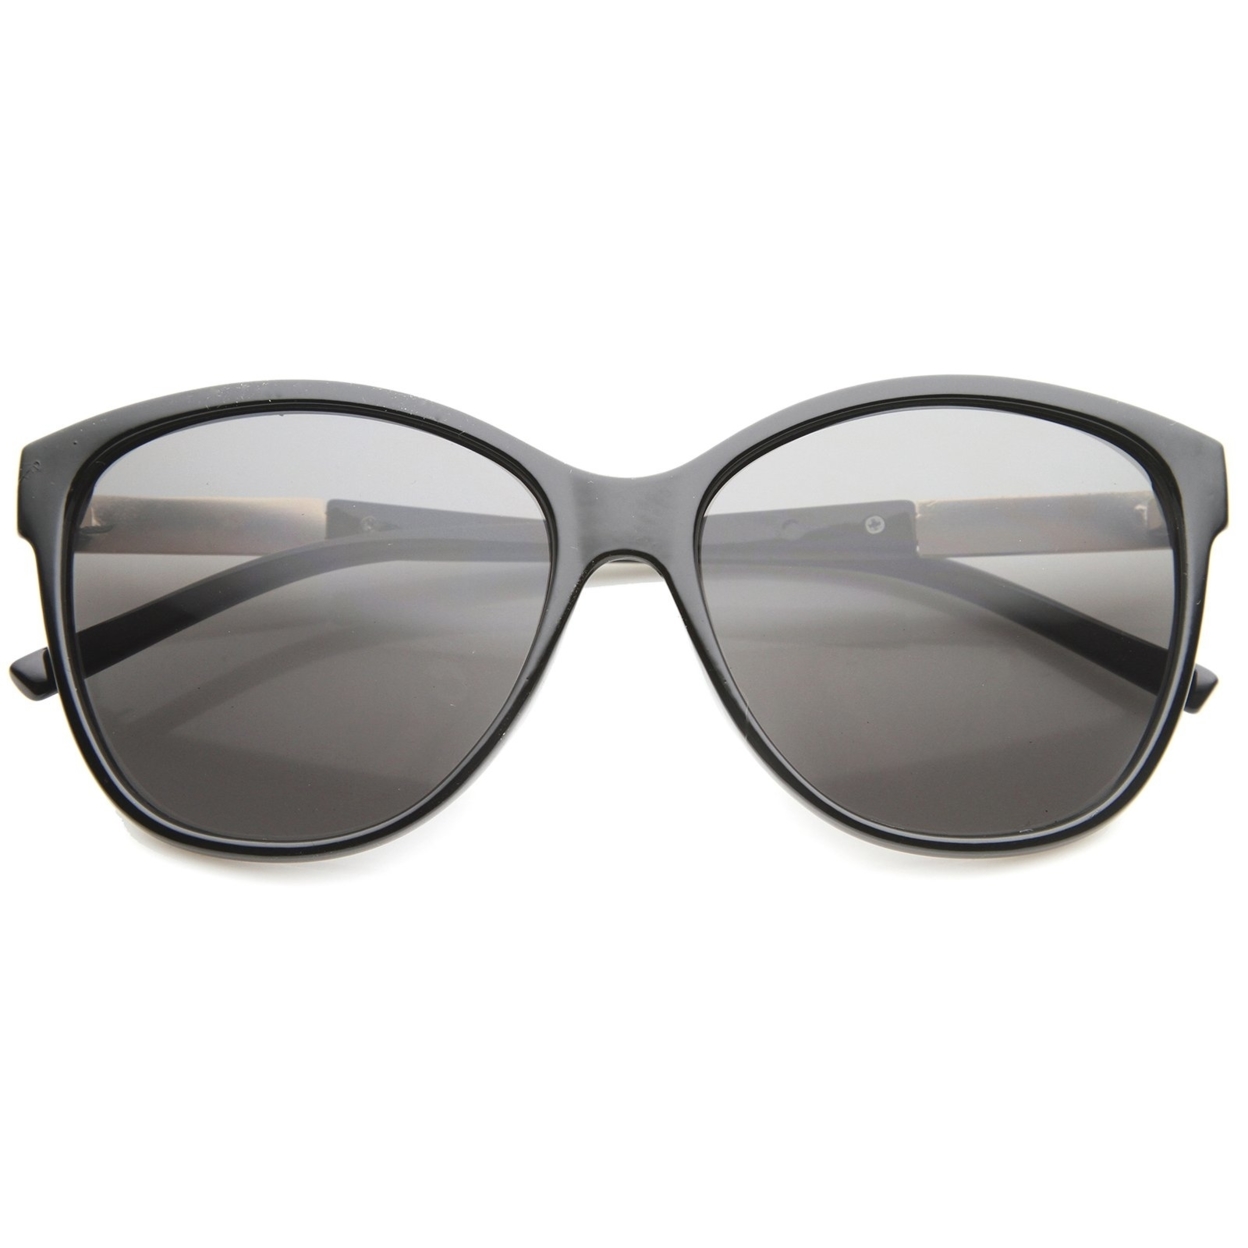 Women's Glam Fashion Metal Temple Oversize Cat Eye Sunglasses 59mm - Creme-Gold / Brown